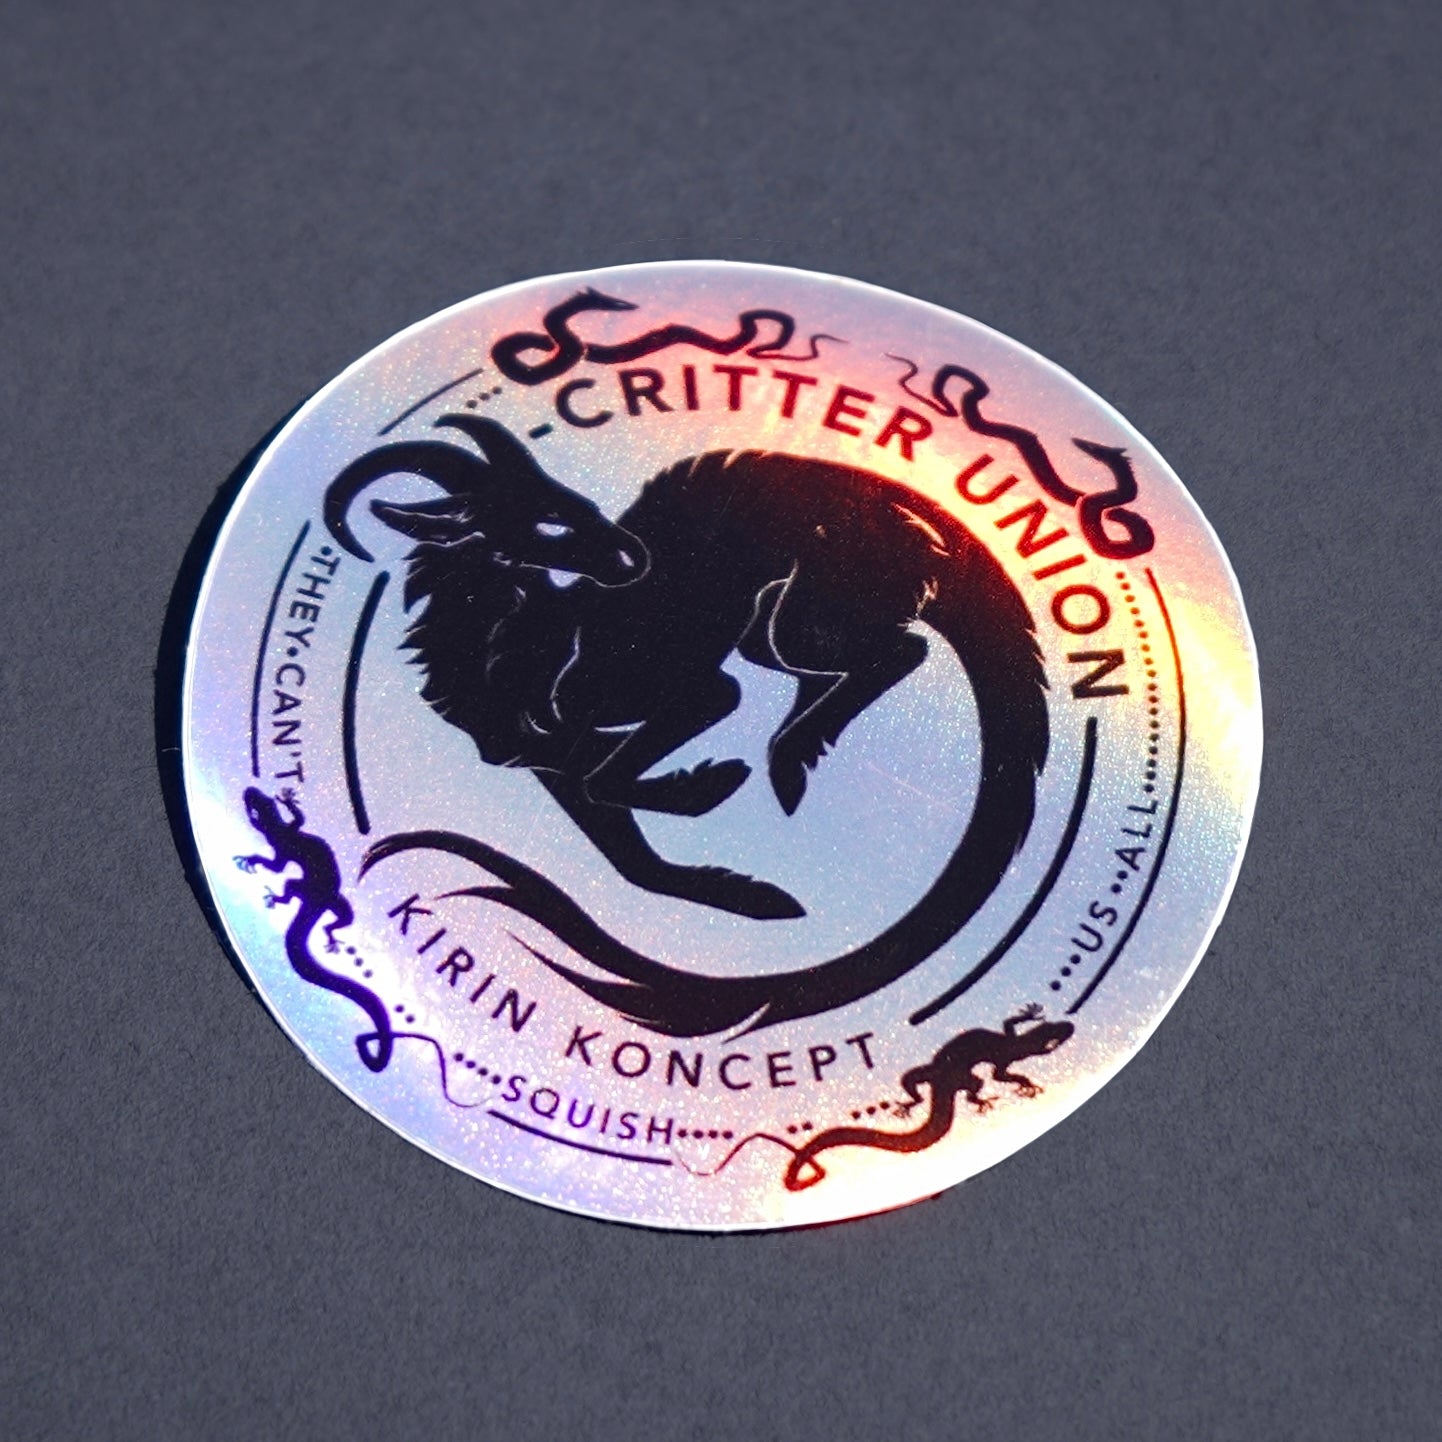 Critter union holographic vinyl sticker